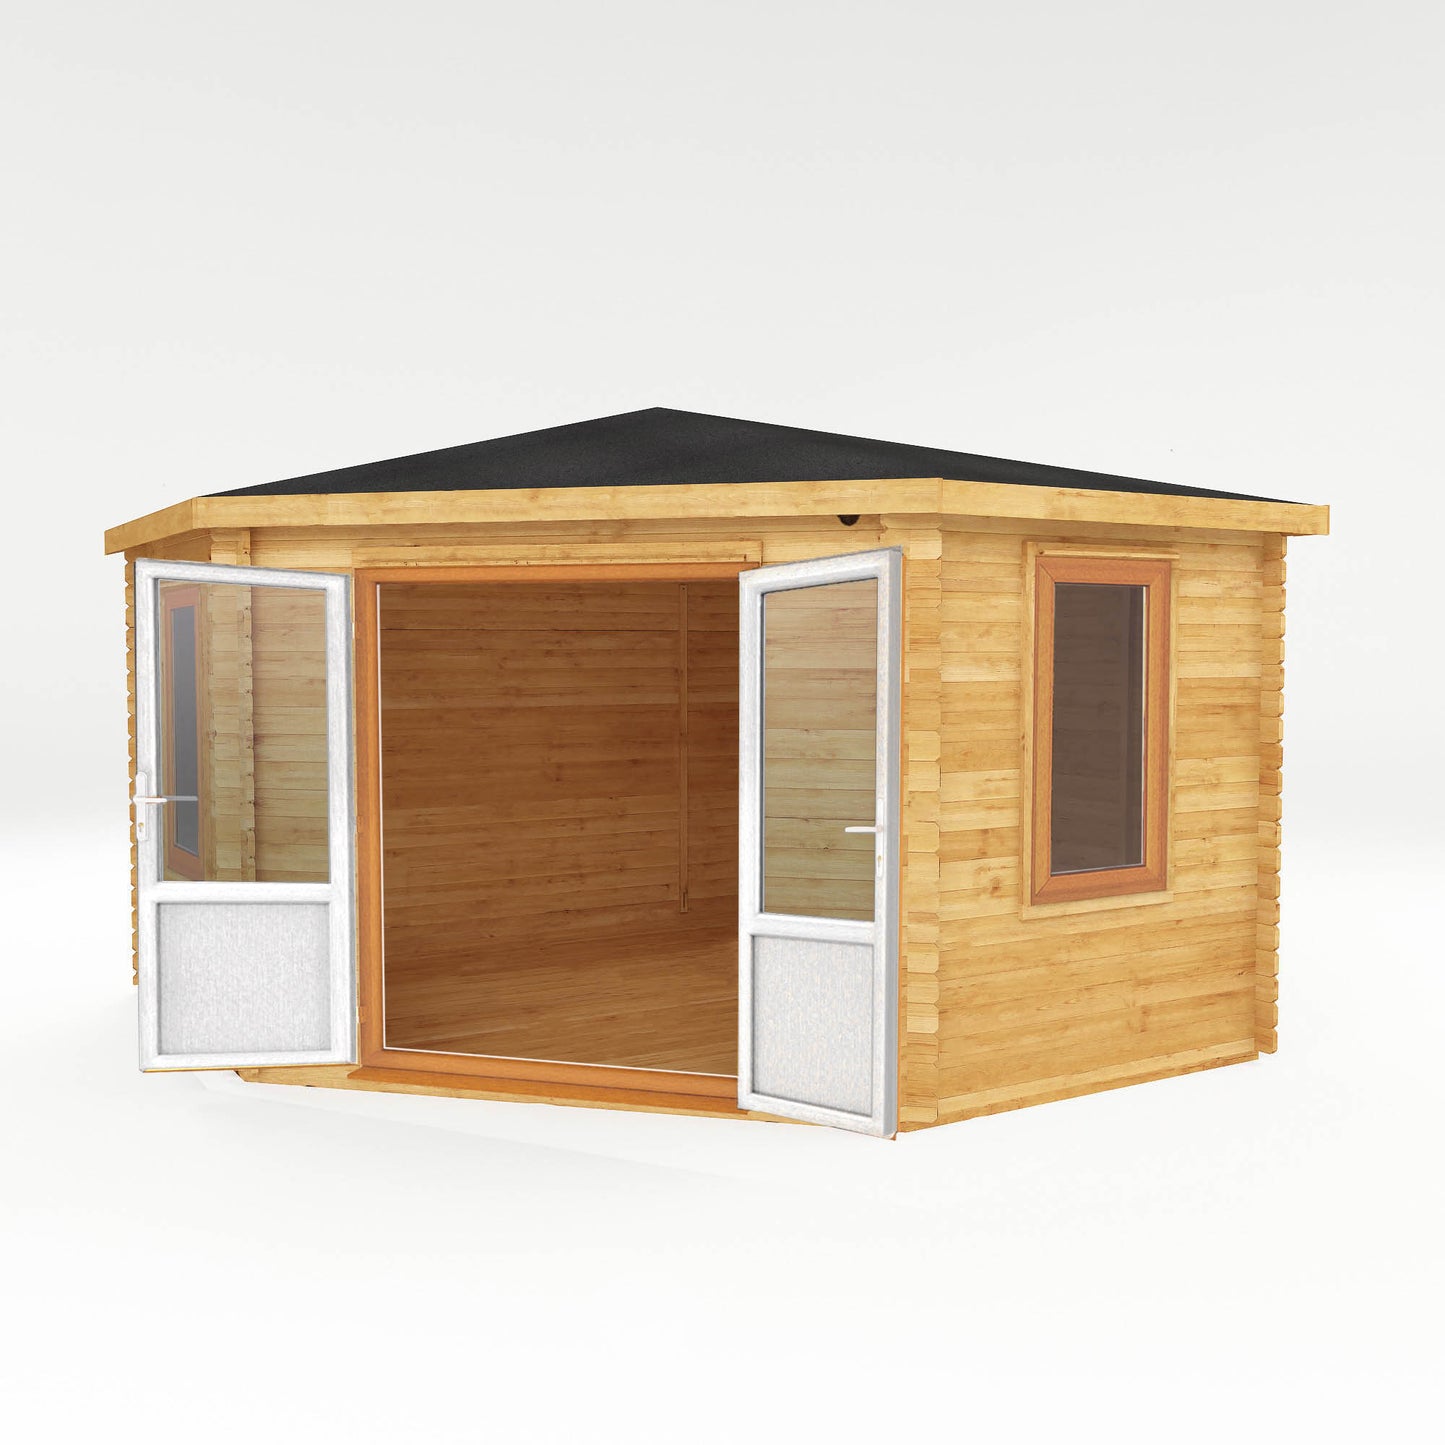 The 4m x 4m Goldcrest Corner Log Cabin with Oak UPVC